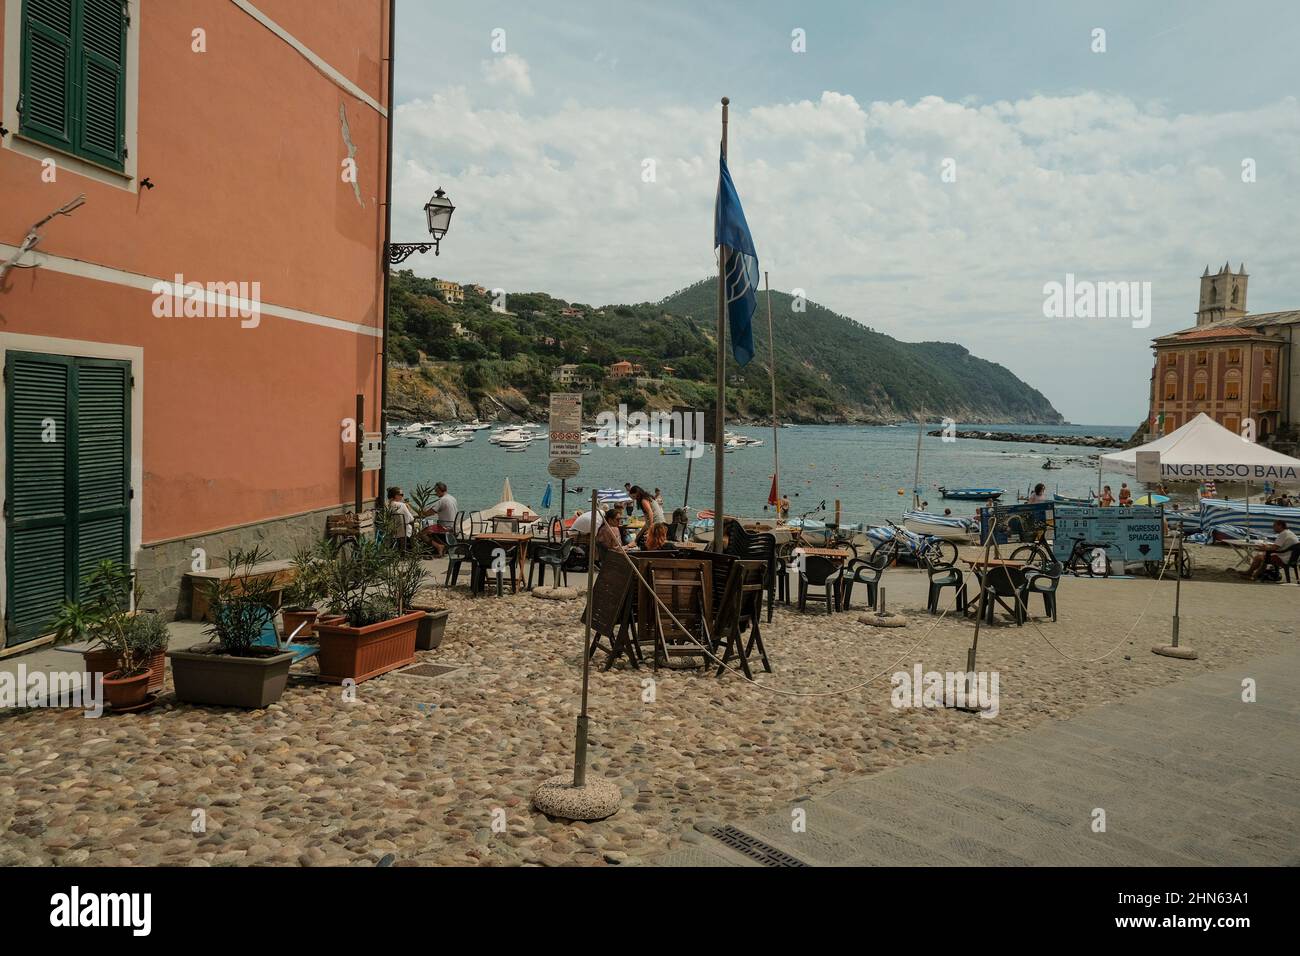 July 2021 Sestri Levante, Italy: Scenic marina view of restaurants in the bay of the Silence in Sestri Levante, Liguria, Italy Stock Photo